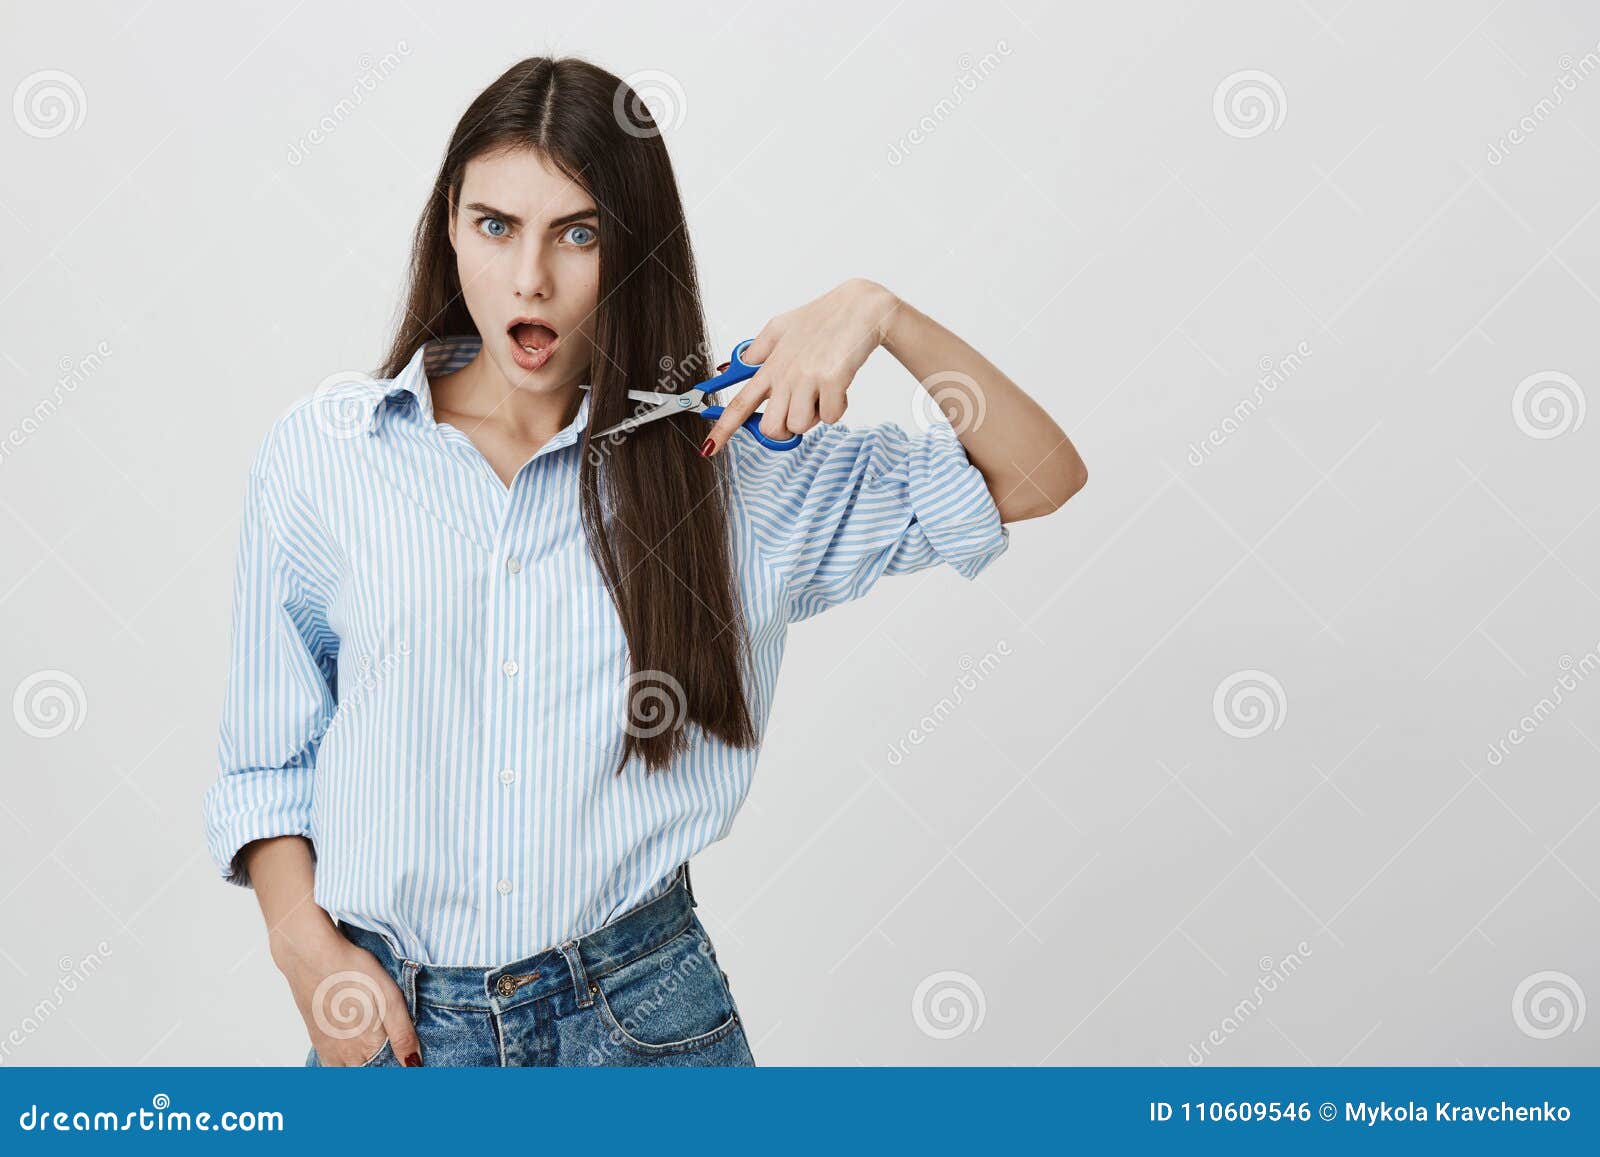 Hot And Stylish Caucasian Female Hairdresser Holding Scissors Near